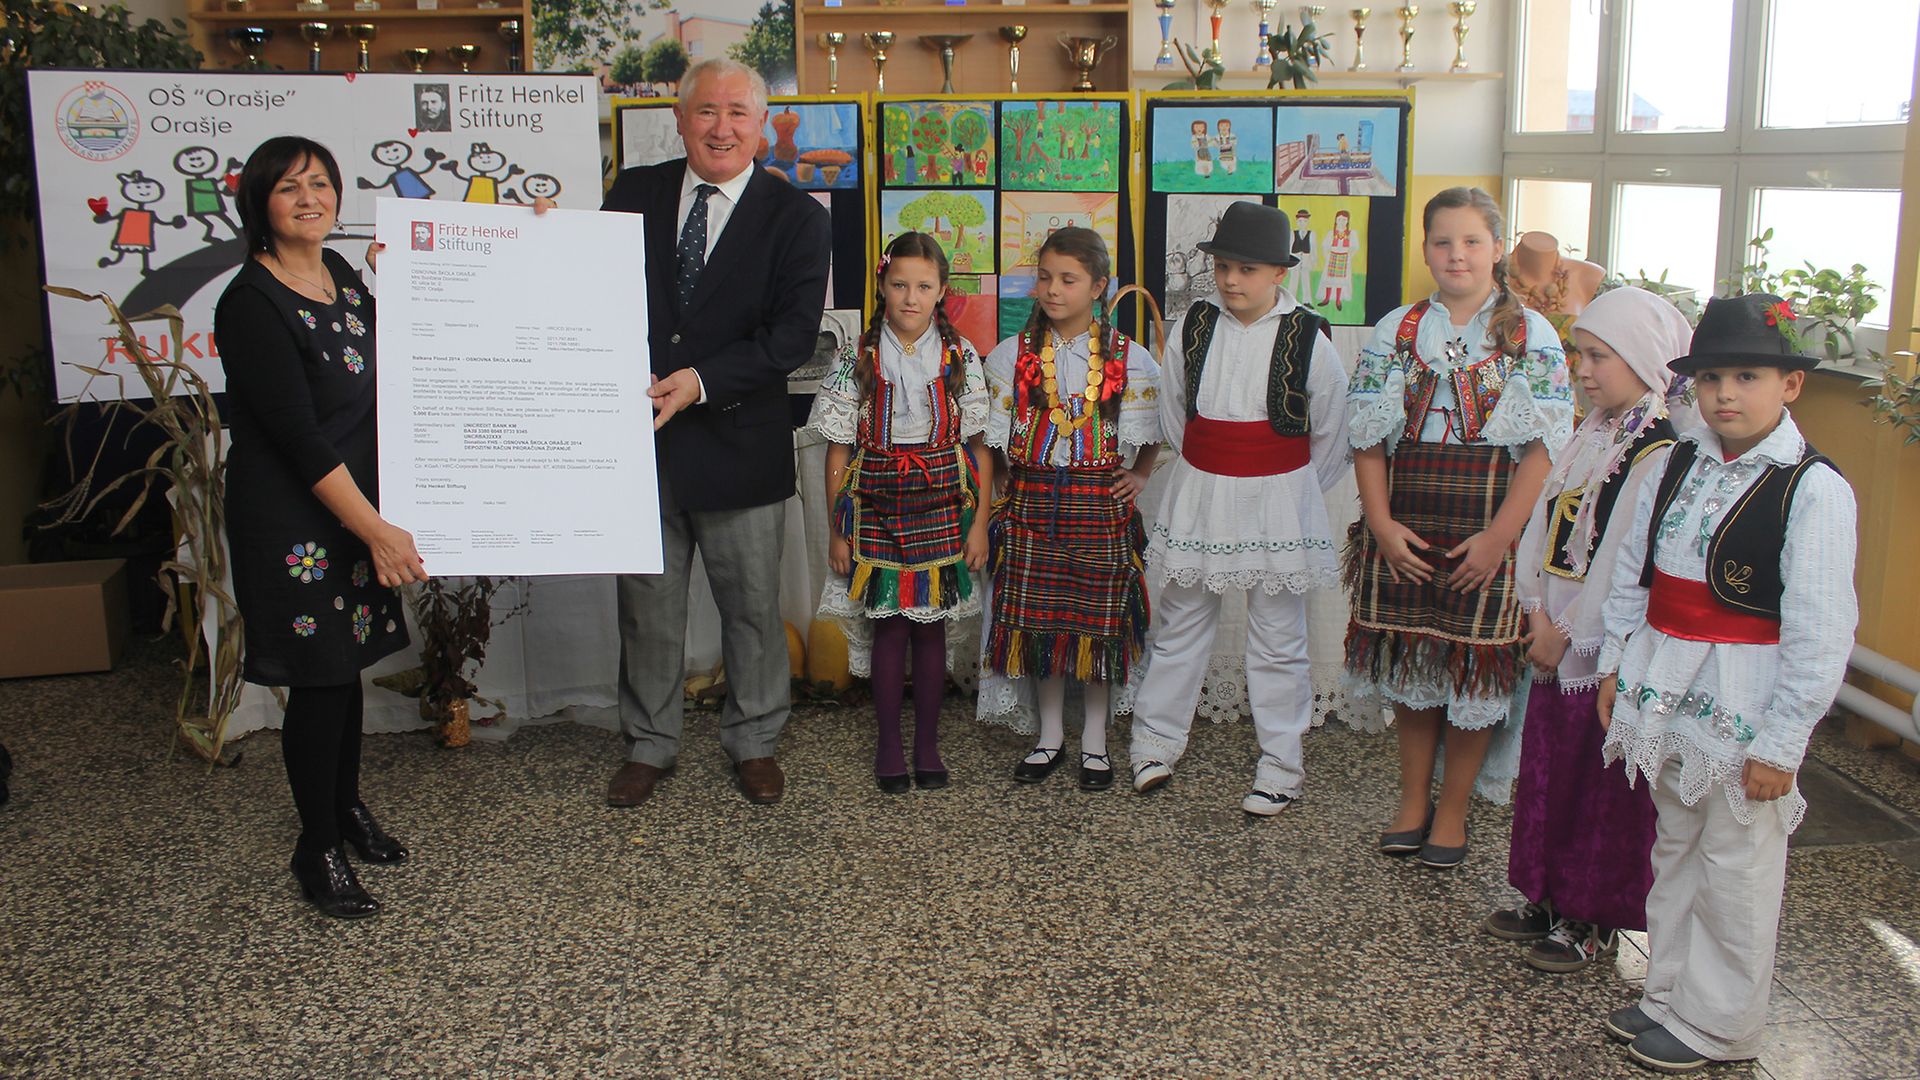 
The Fritz Henkel Foundation donated 5,000 euros to the “Orašje” Primary School.